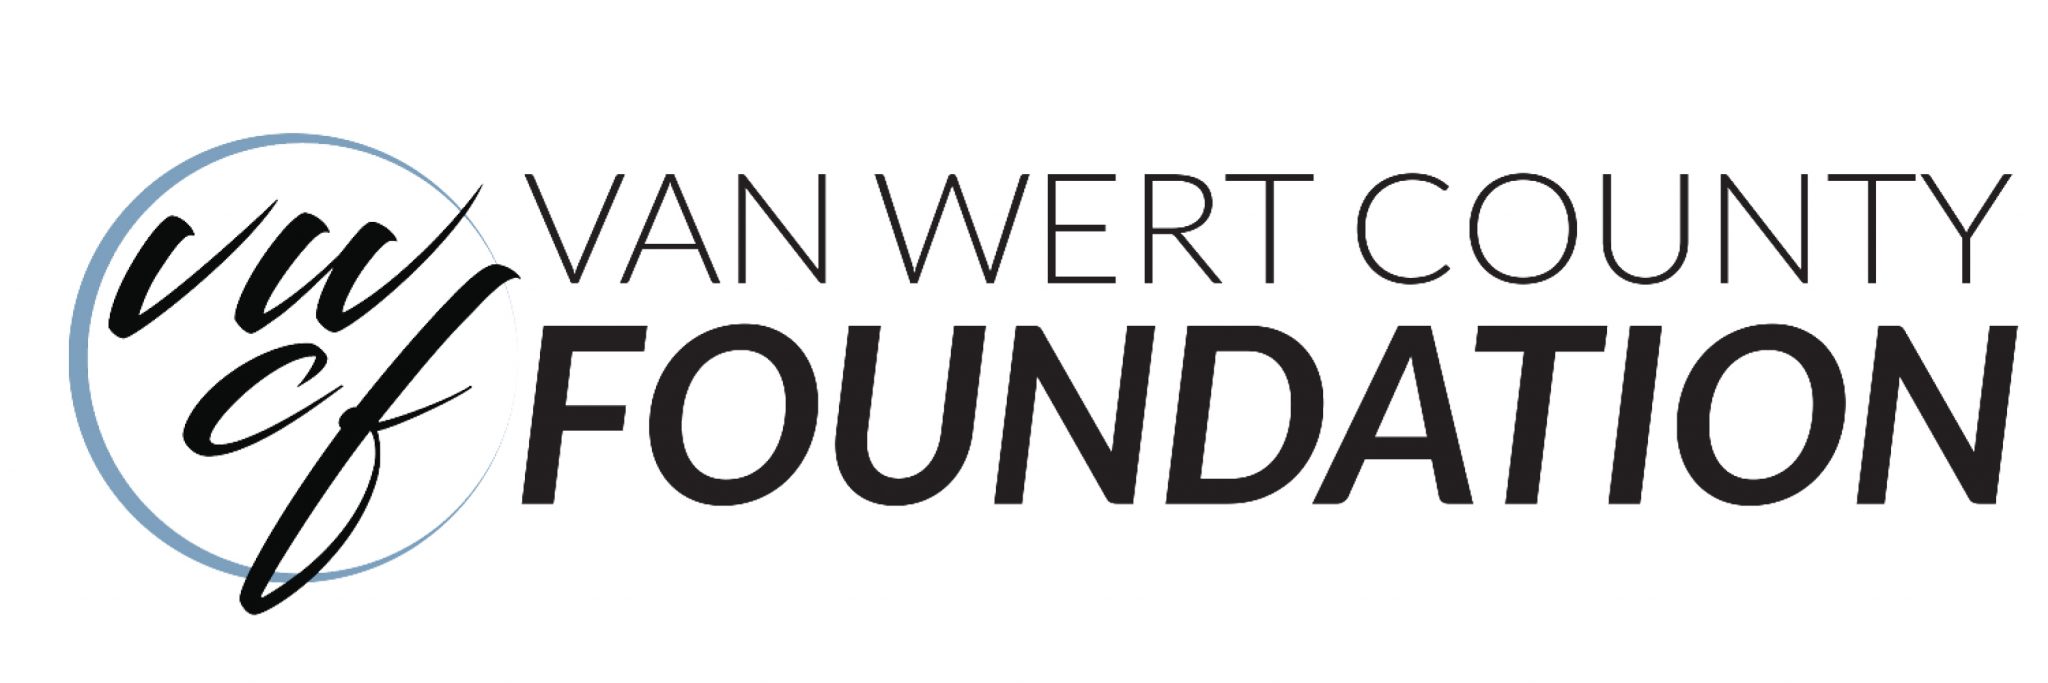 Van Wert County Foundation logo